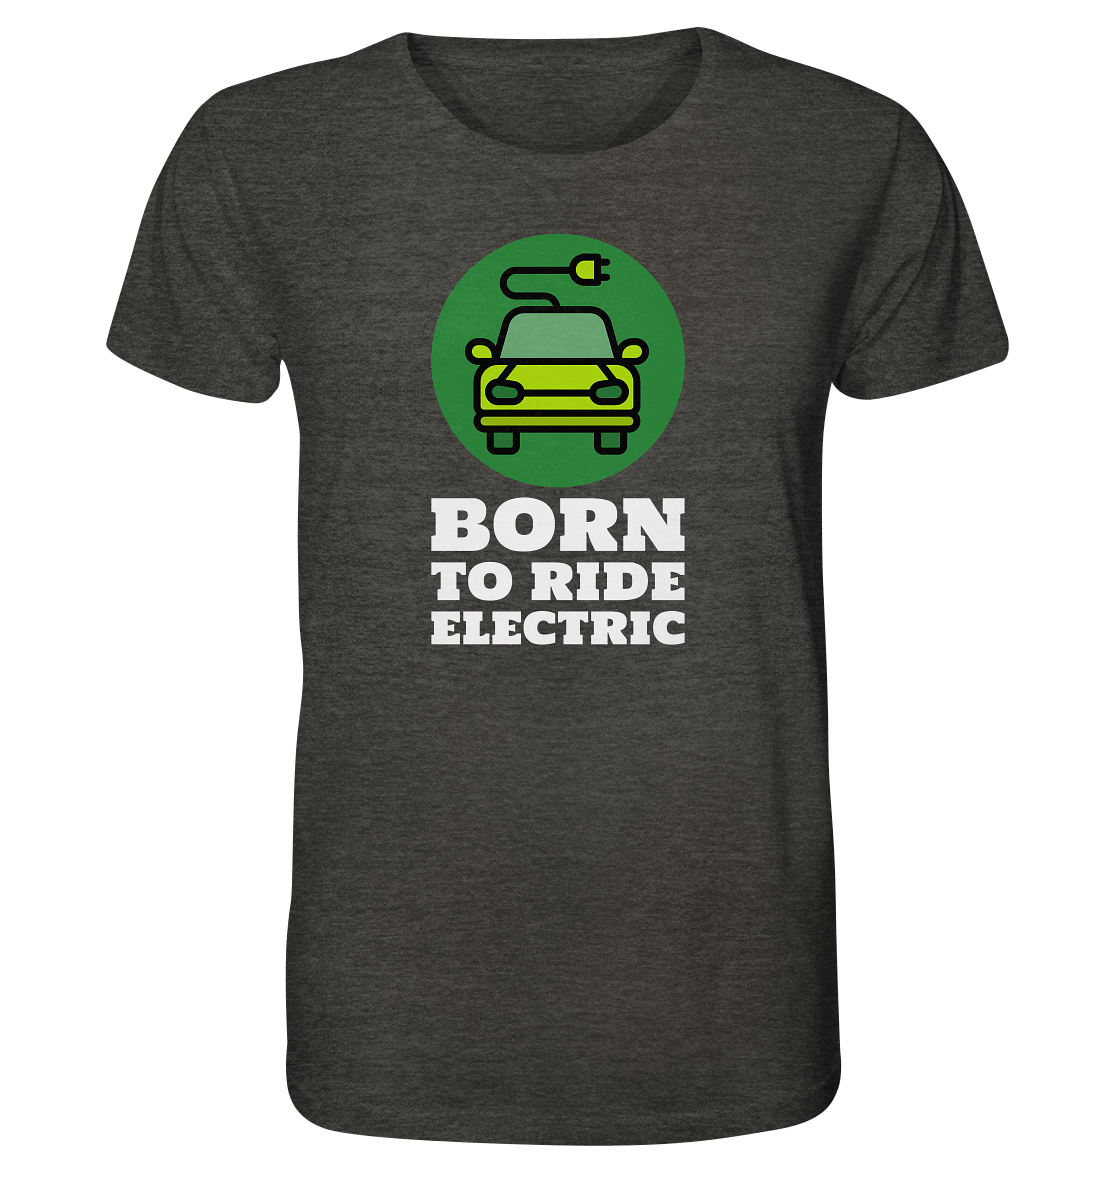 Born to ride electric ORGANIC - Organic Shirt (meliert)